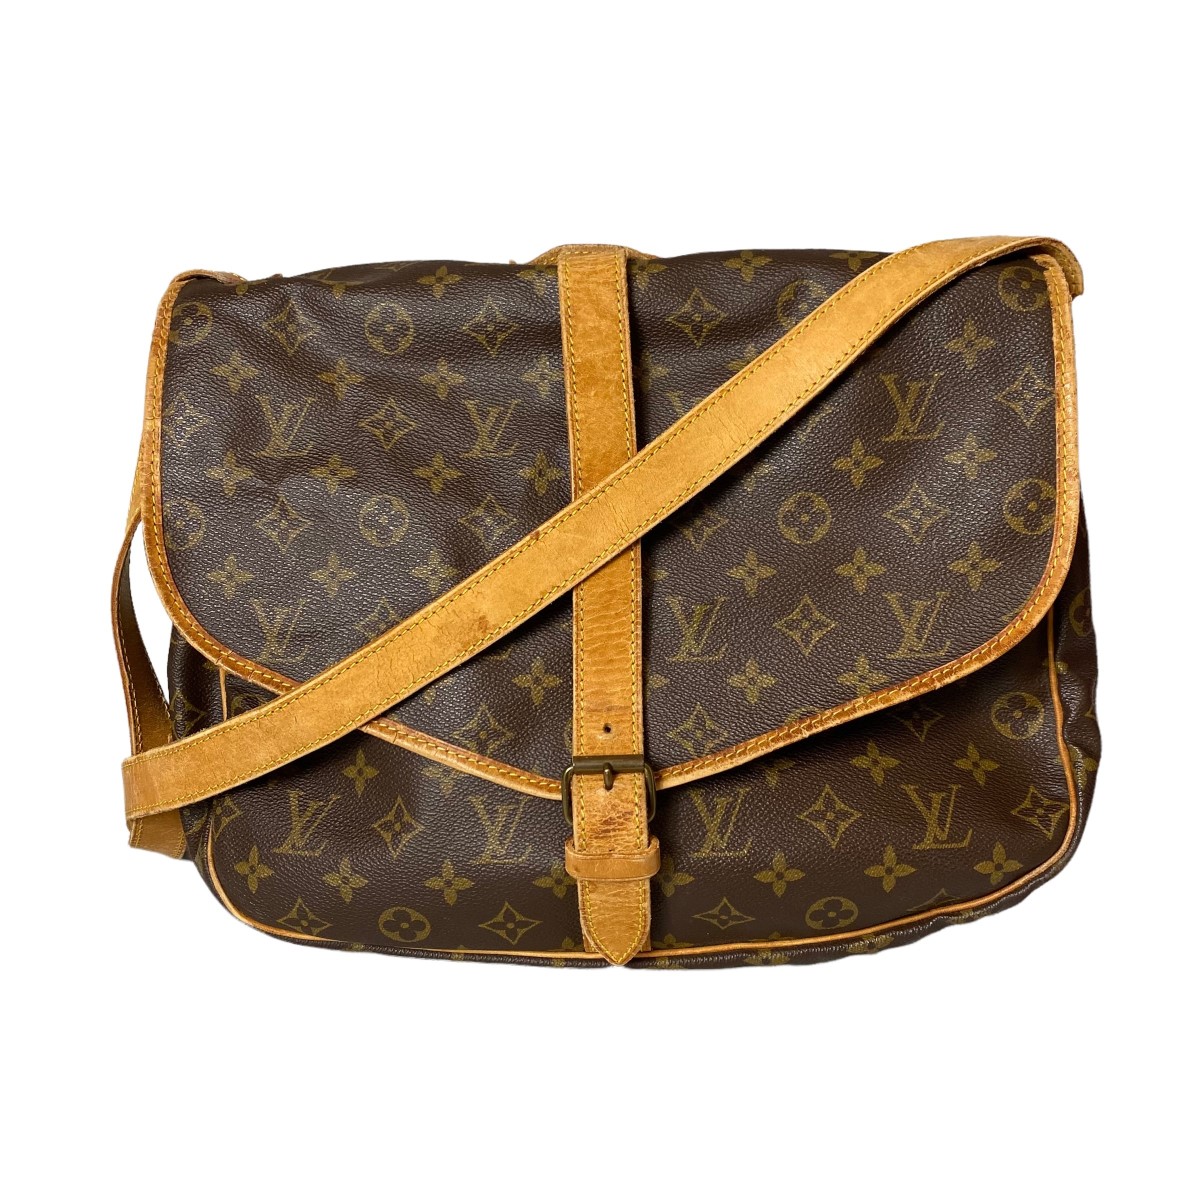 Thurs Oct 27 – Louis Vuitton Saumur 35 Monogram Bag – $899